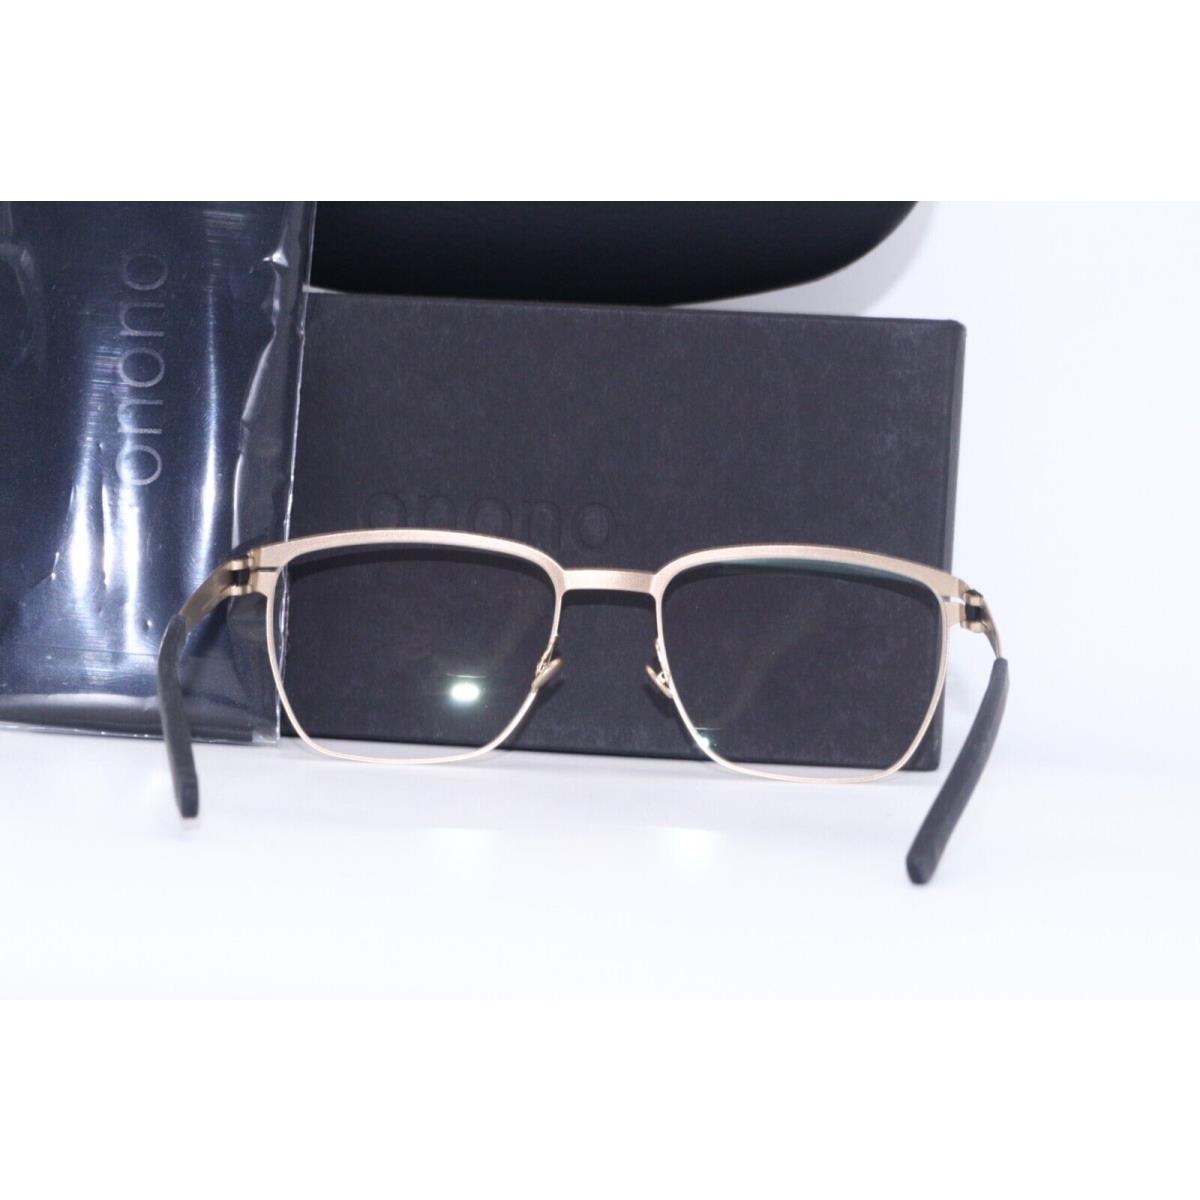 ic! berlin eyeglasses  - GOLD BLACK Frame, Clear Lens 2